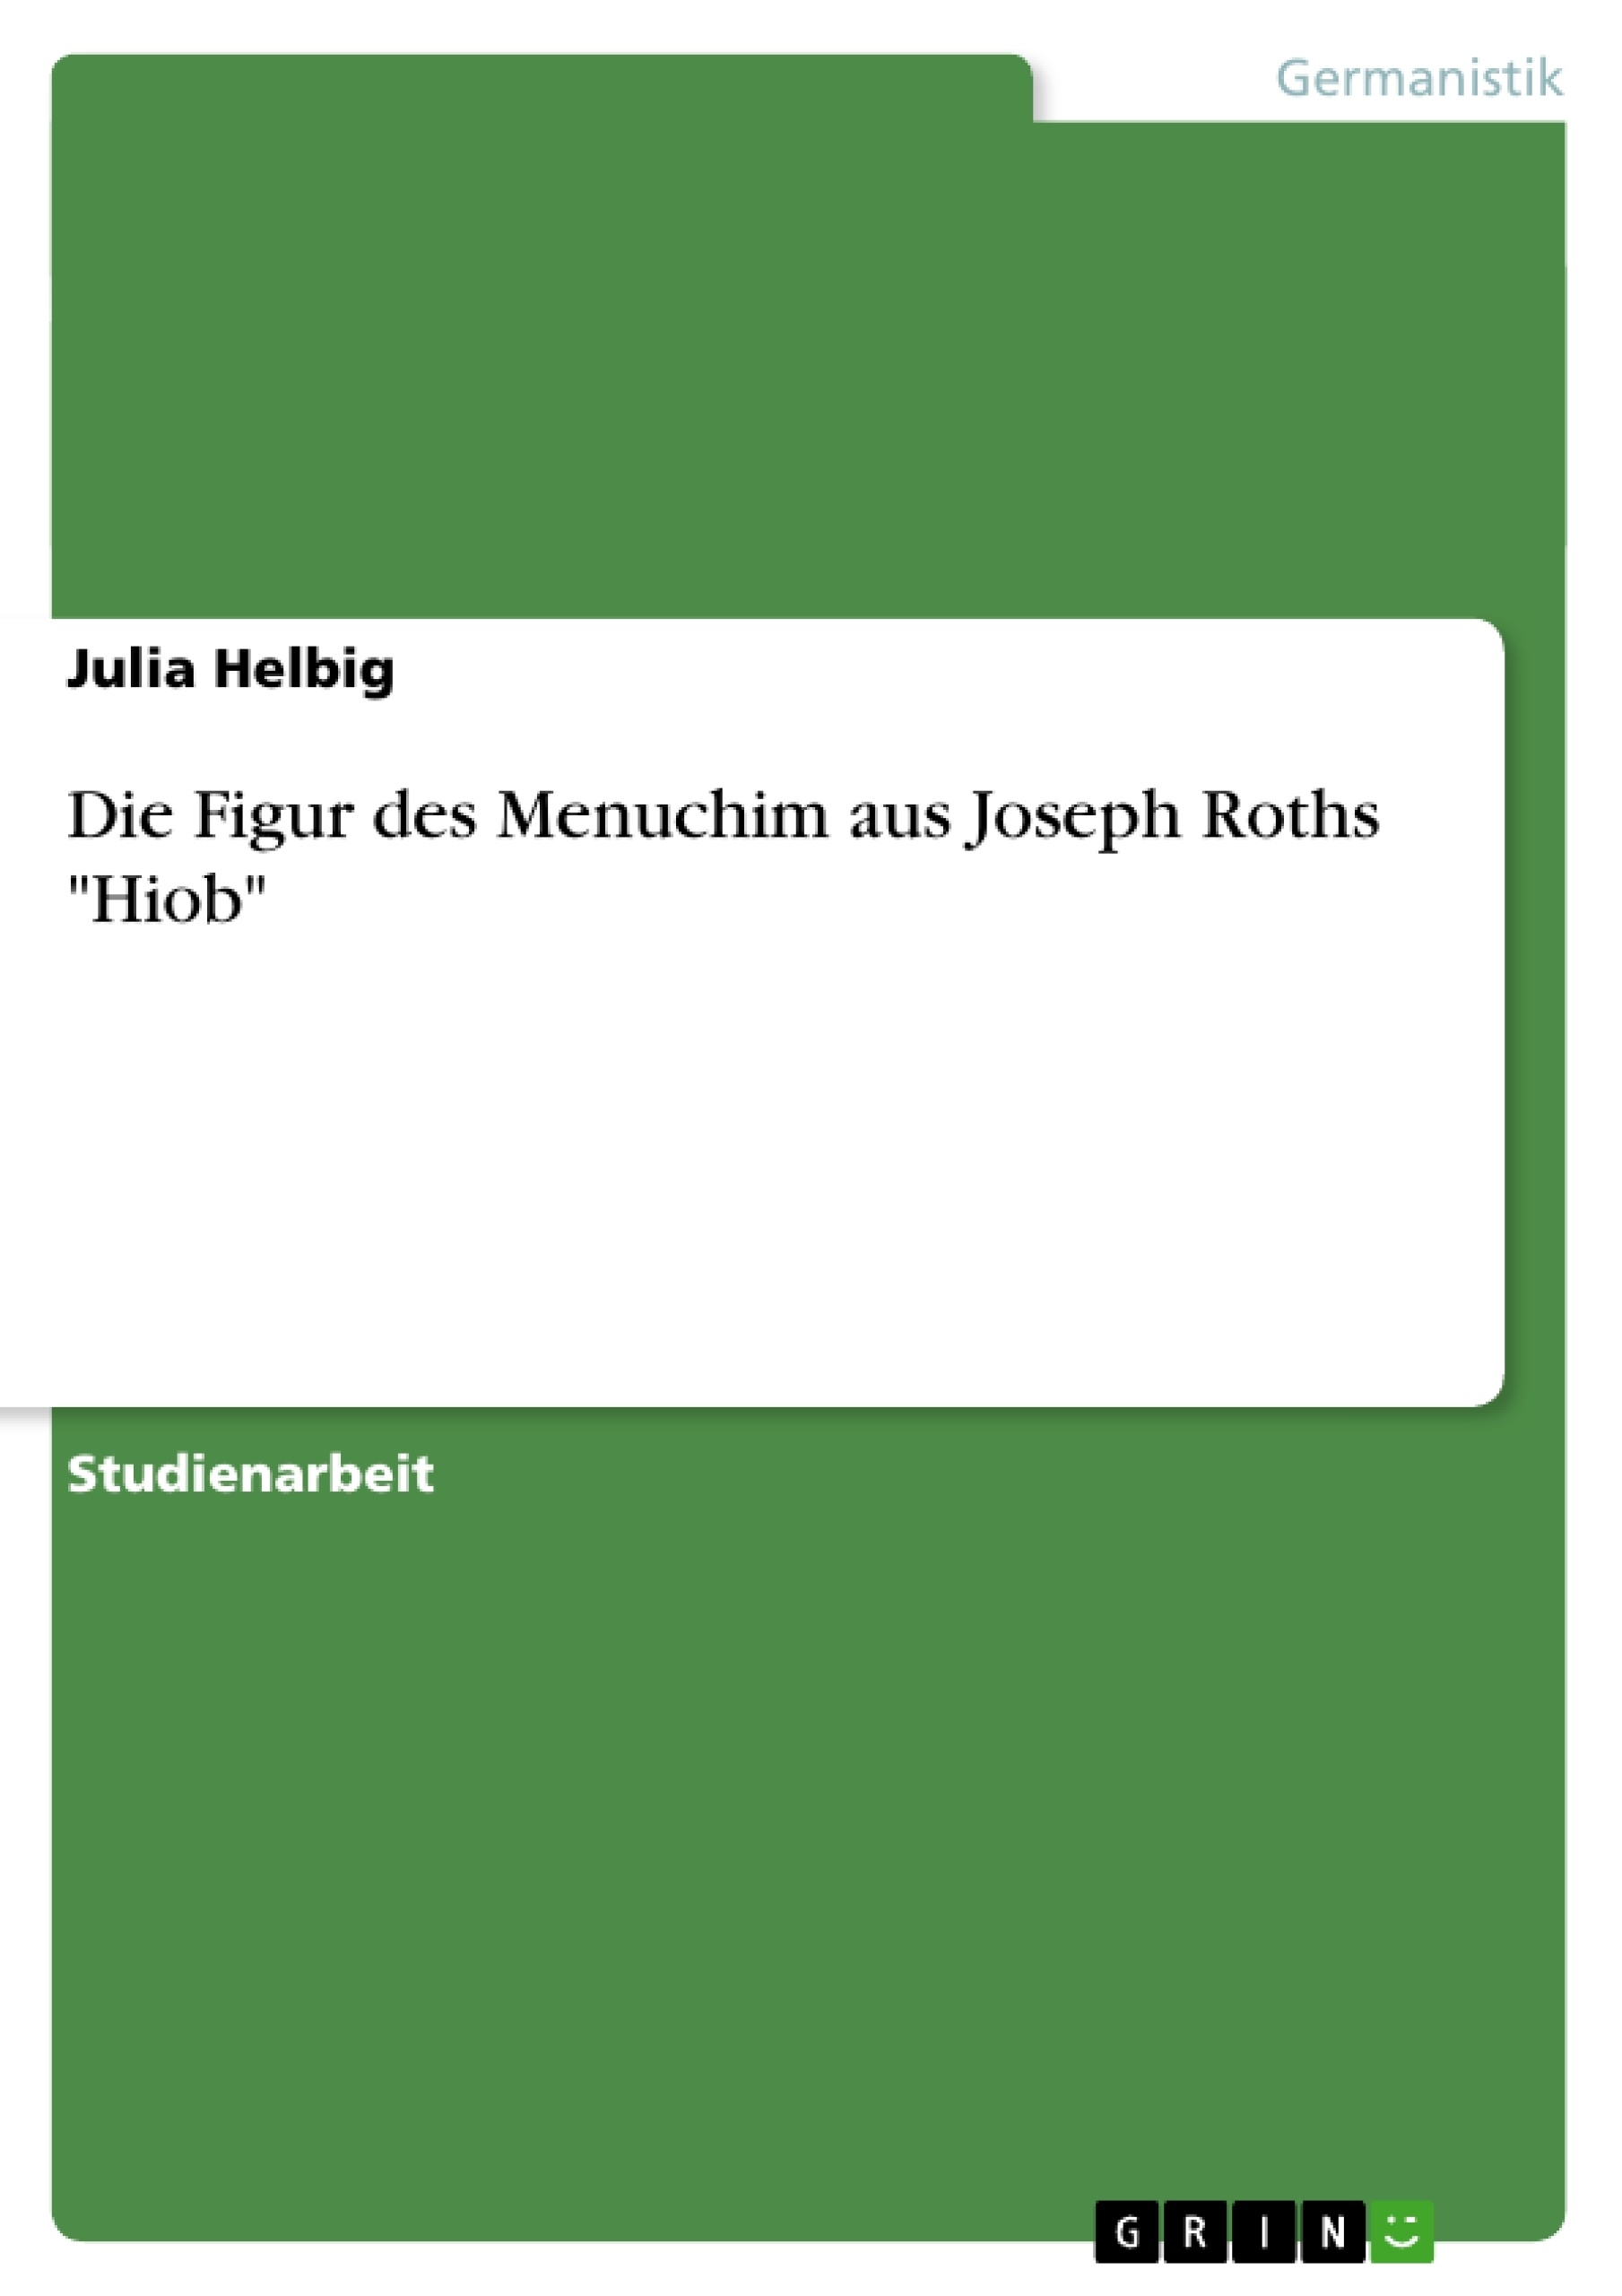 Título: Die Figur des Menuchim aus Joseph Roths "Hiob"